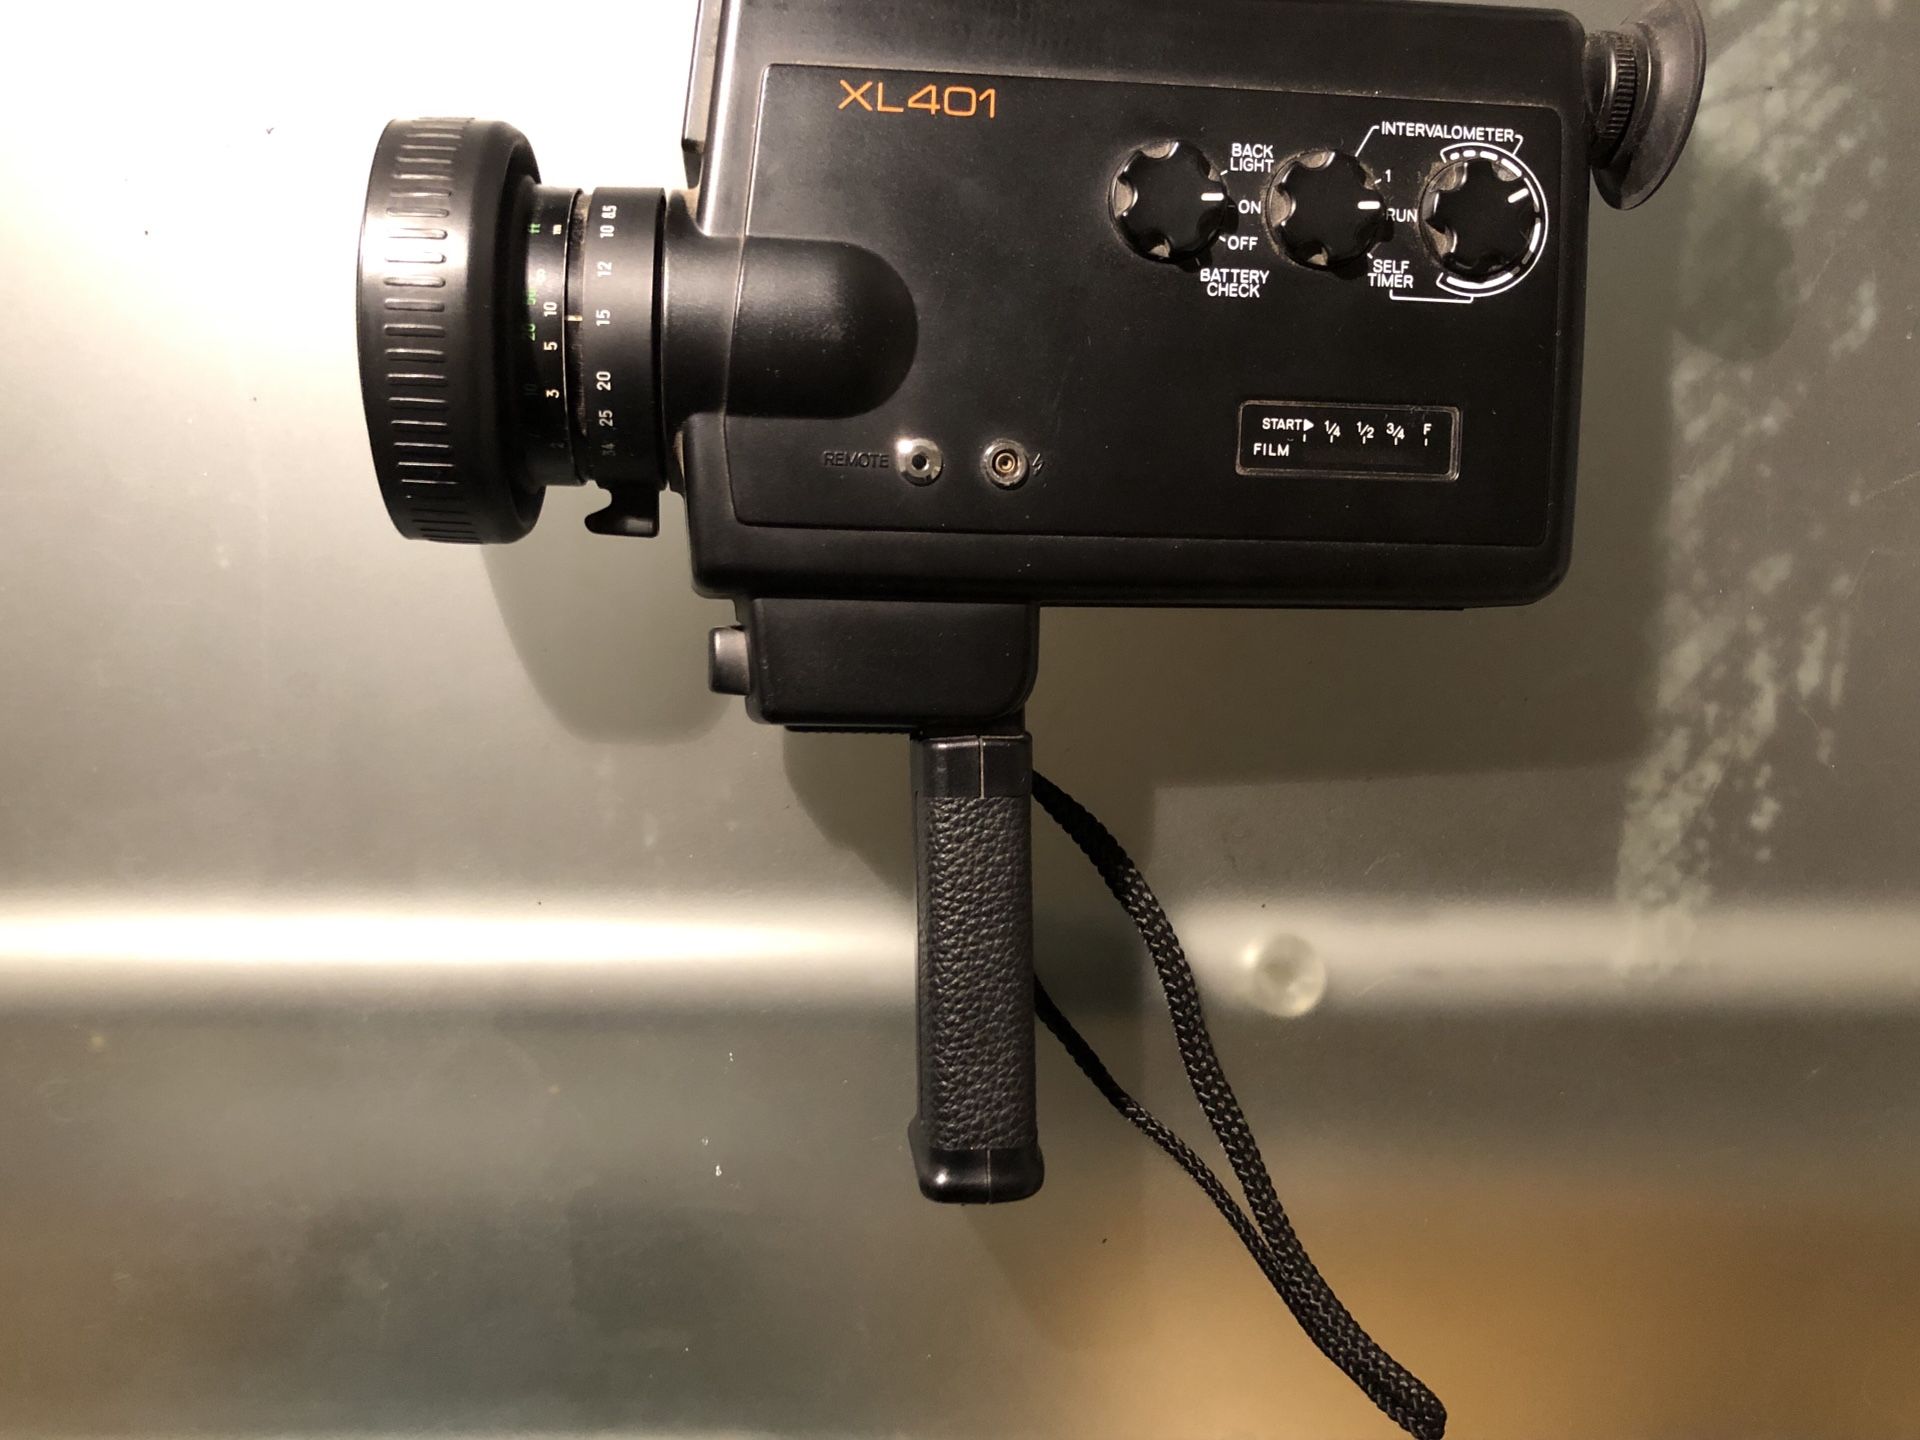 Minolta xl 401 8 mm film video camera